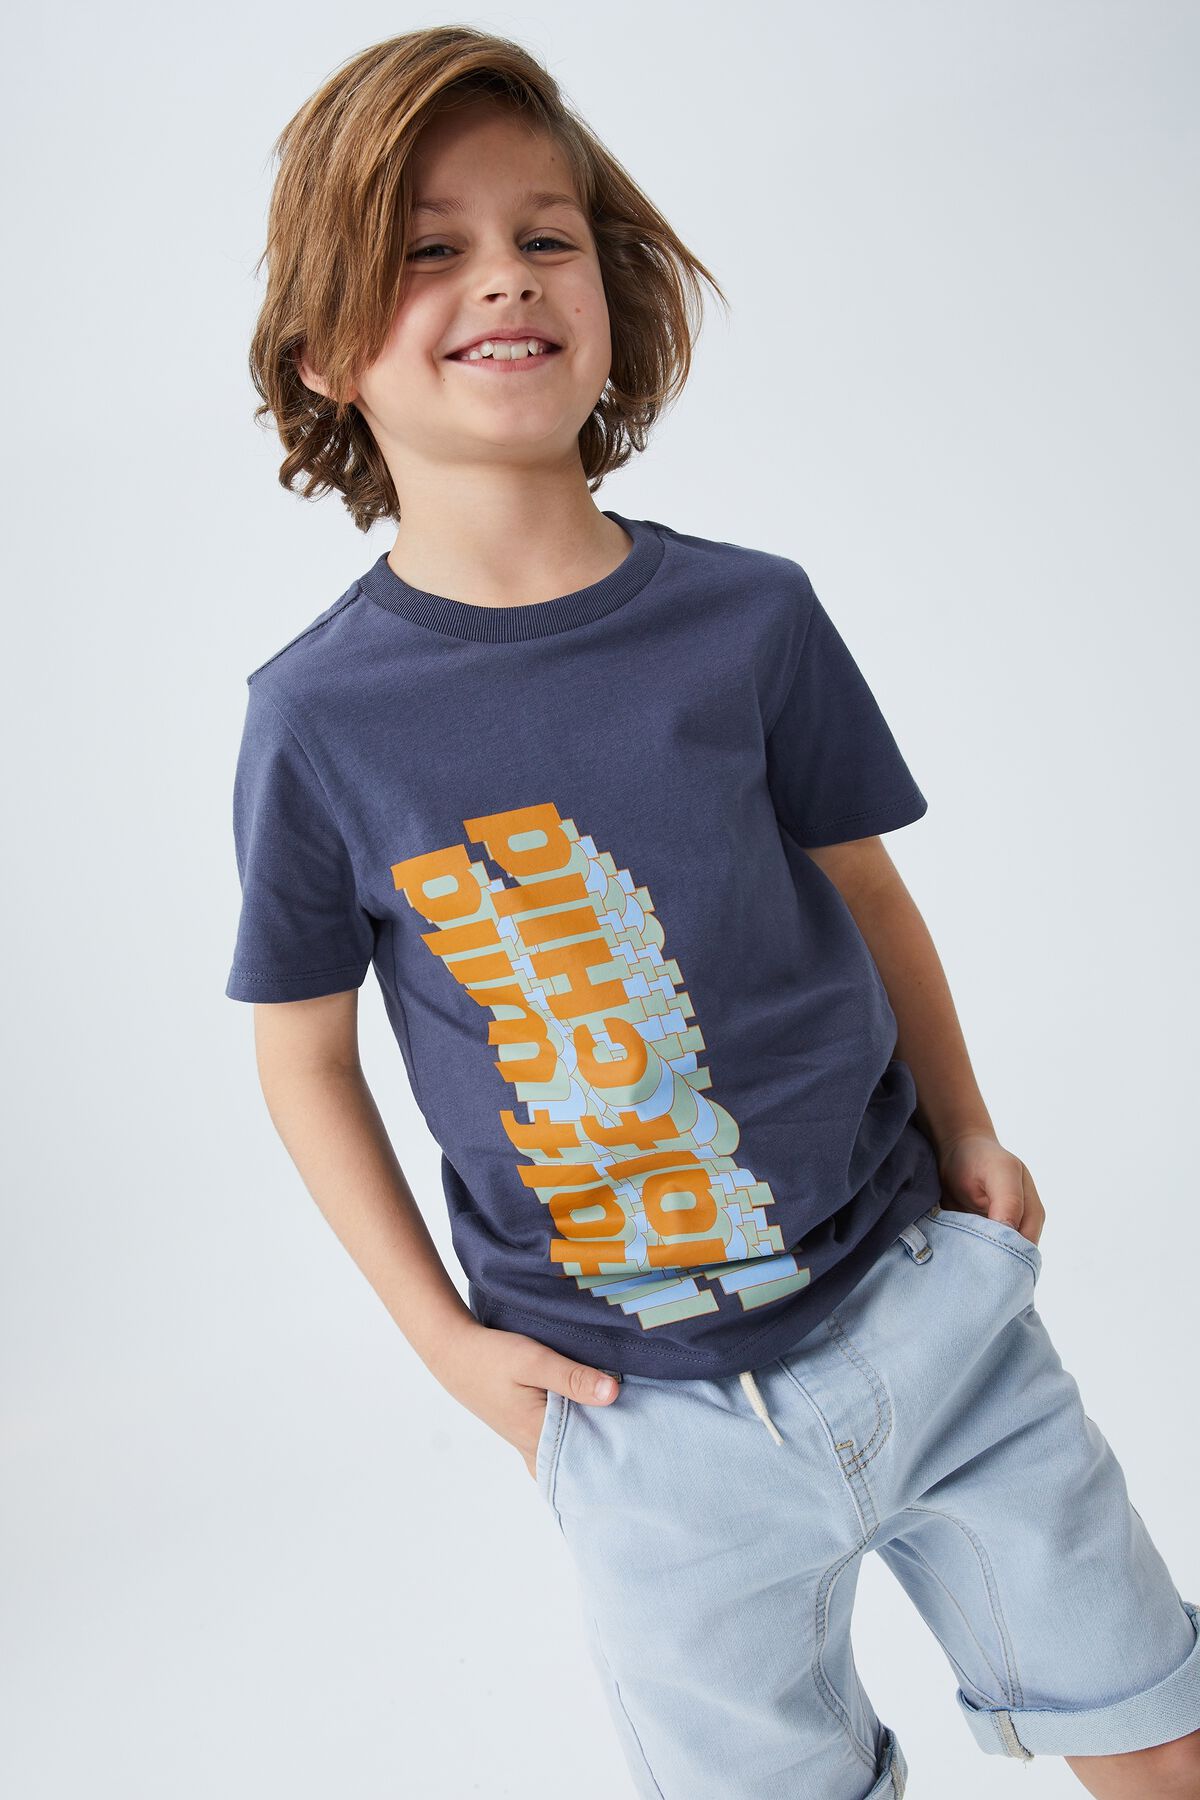 Boys T-Shirts - Tees, Longsleeve Tops | Cotton On Kids